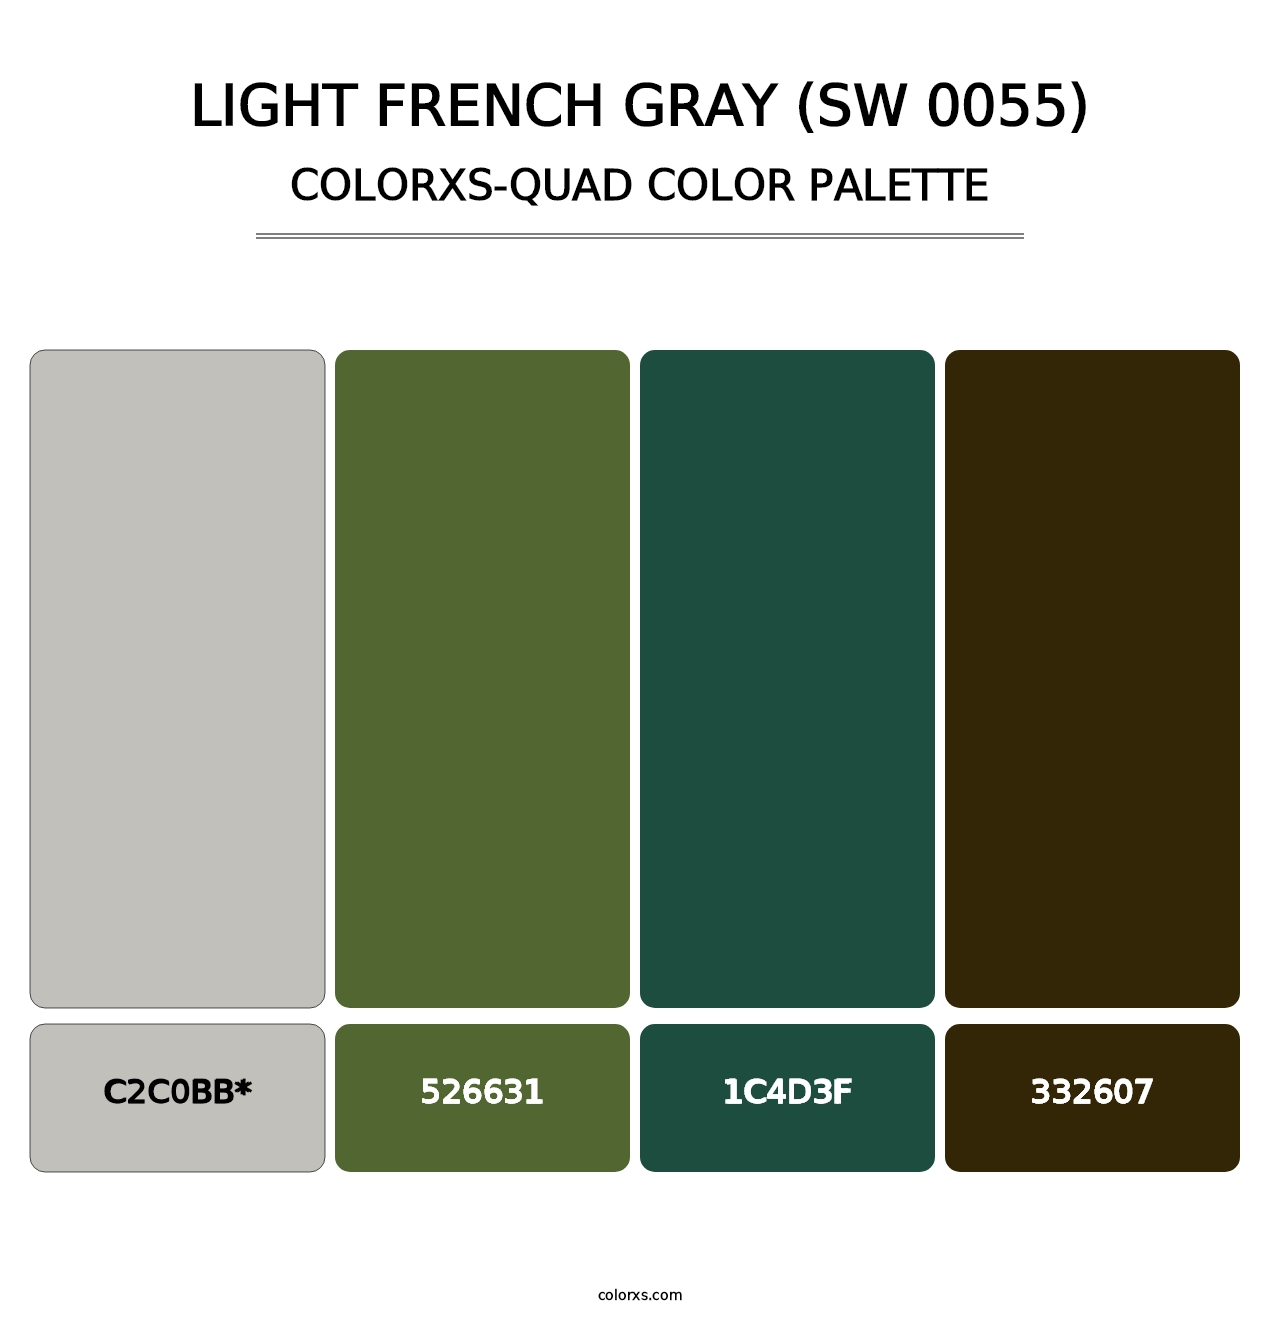 Light French Gray (SW 0055) - Colorxs Quad Palette